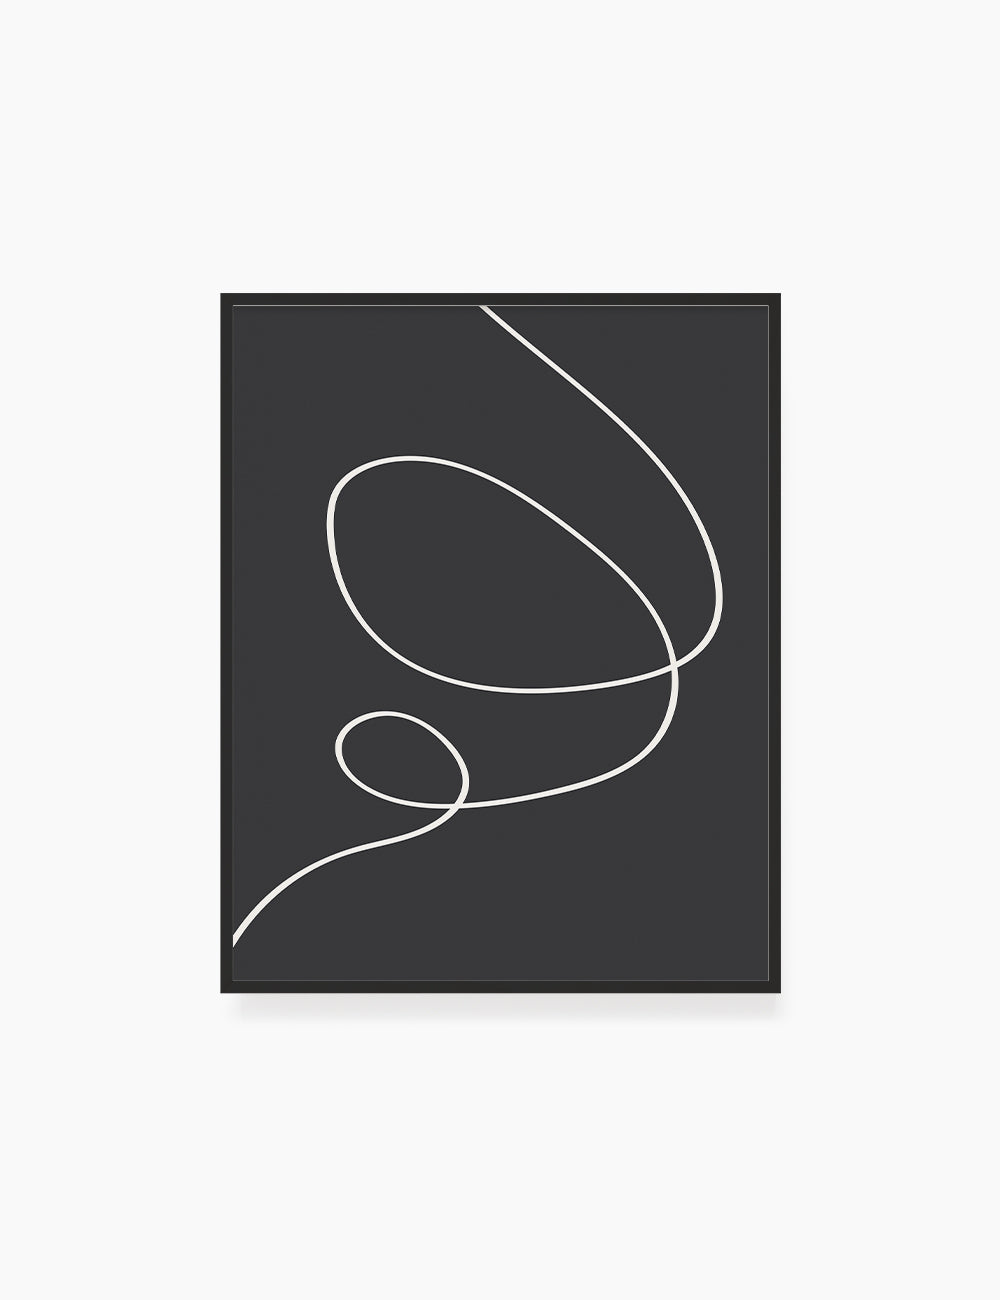 MINIMAL LINE ART. Abstract. Boho. Black and White. Printable Wall Art Illustration. - PAPER MOON Art & Design